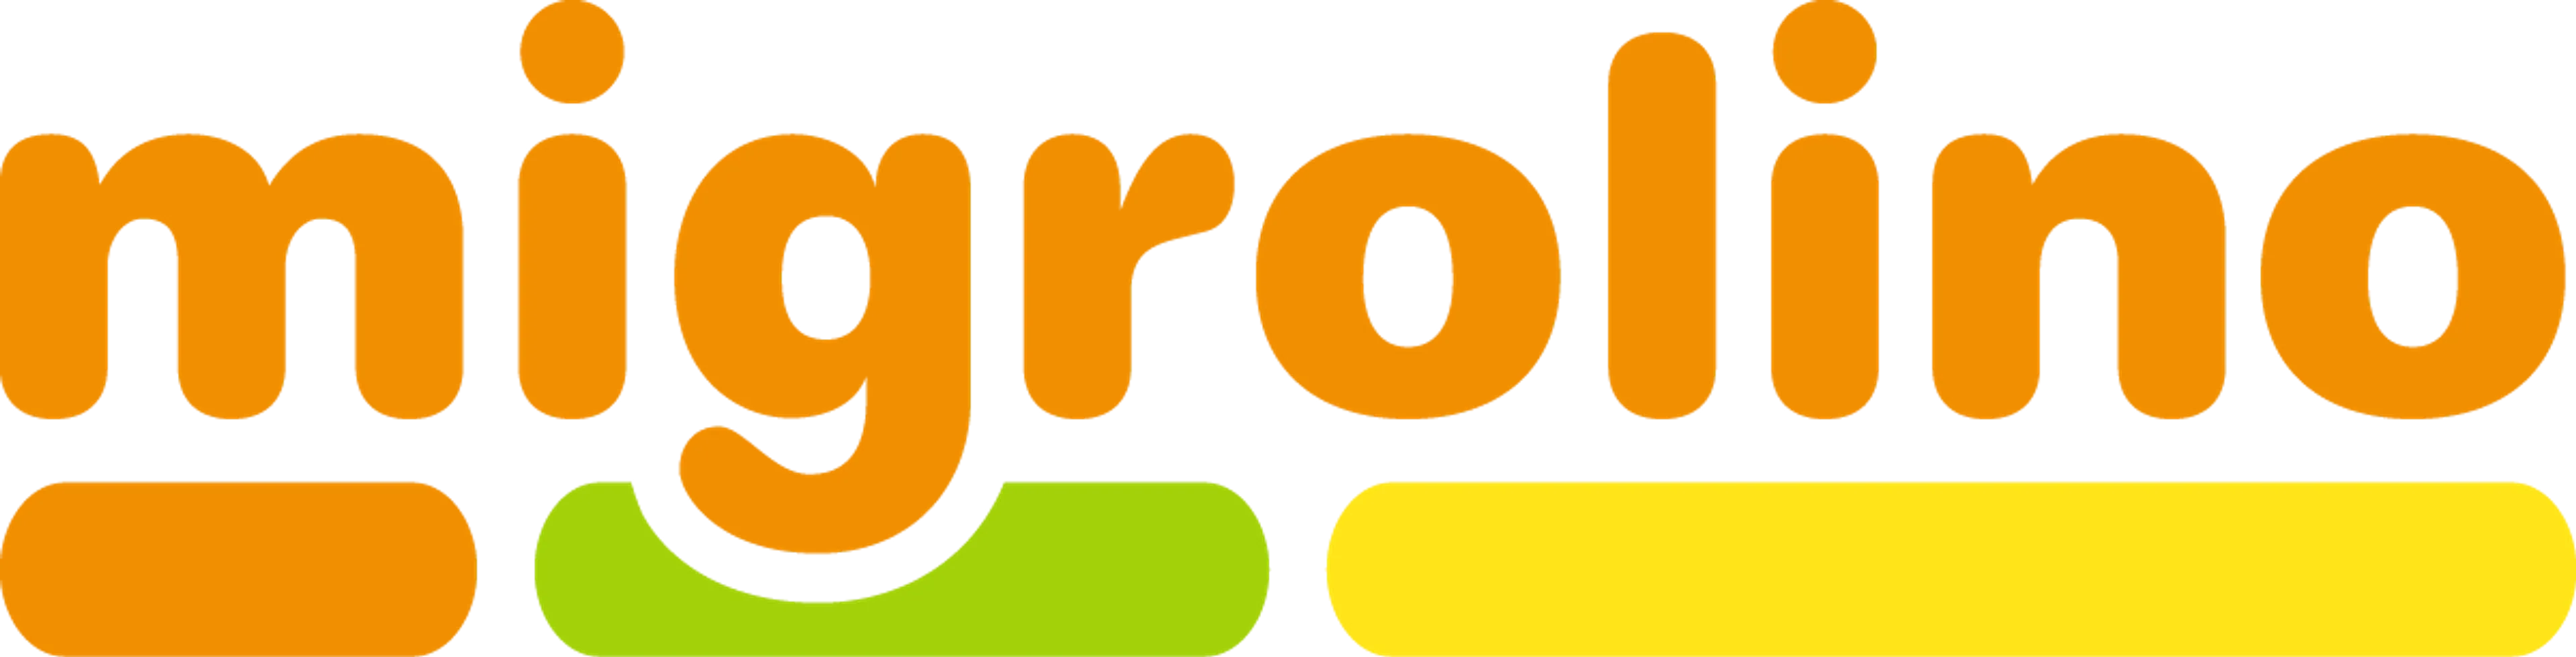 MIGROLINO logo